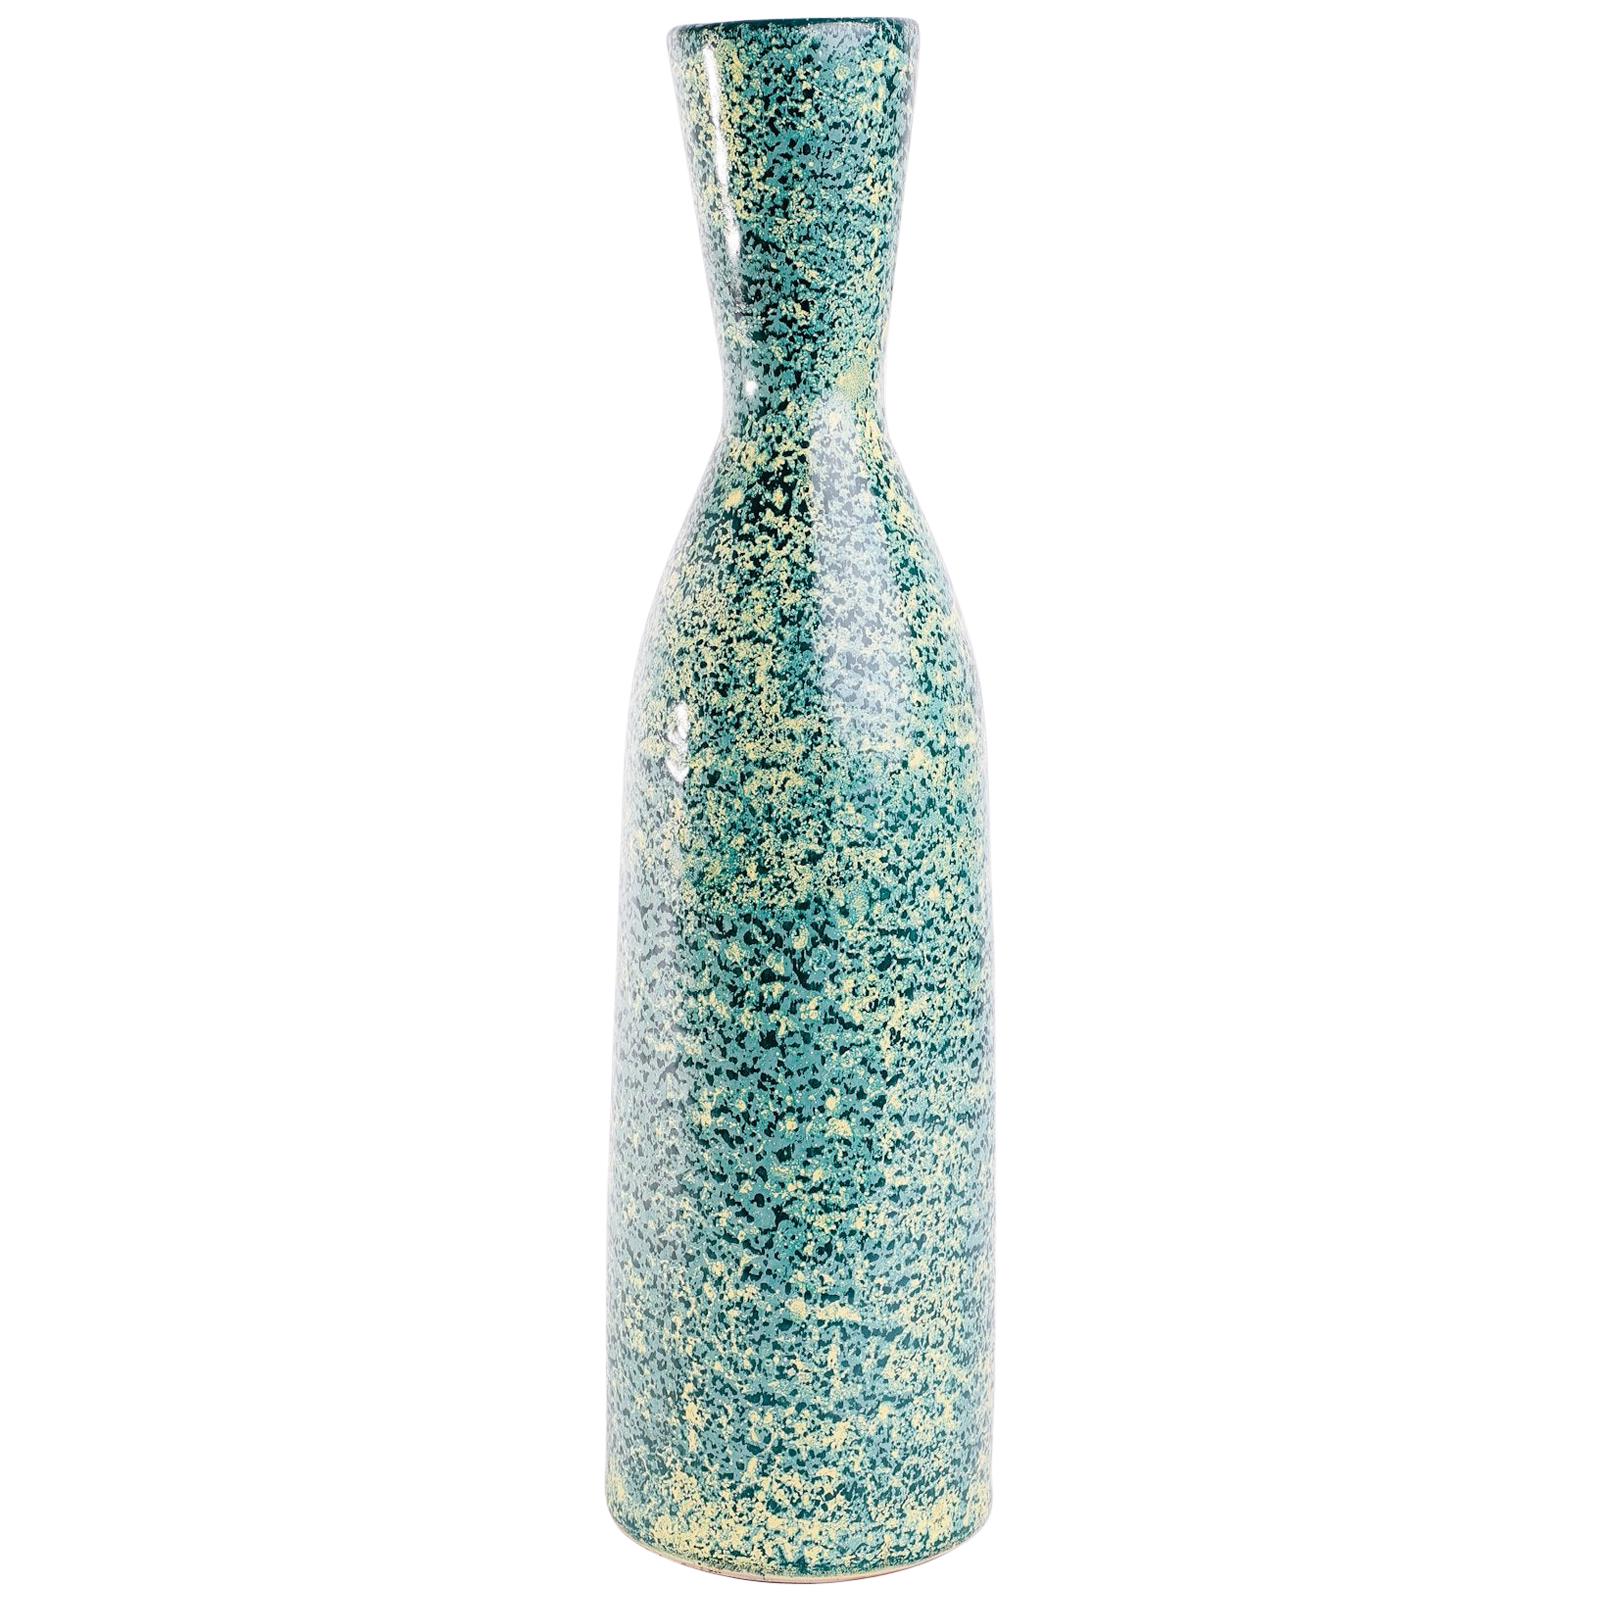 Hungarian Ceramic Vase from Tofej, 1970s